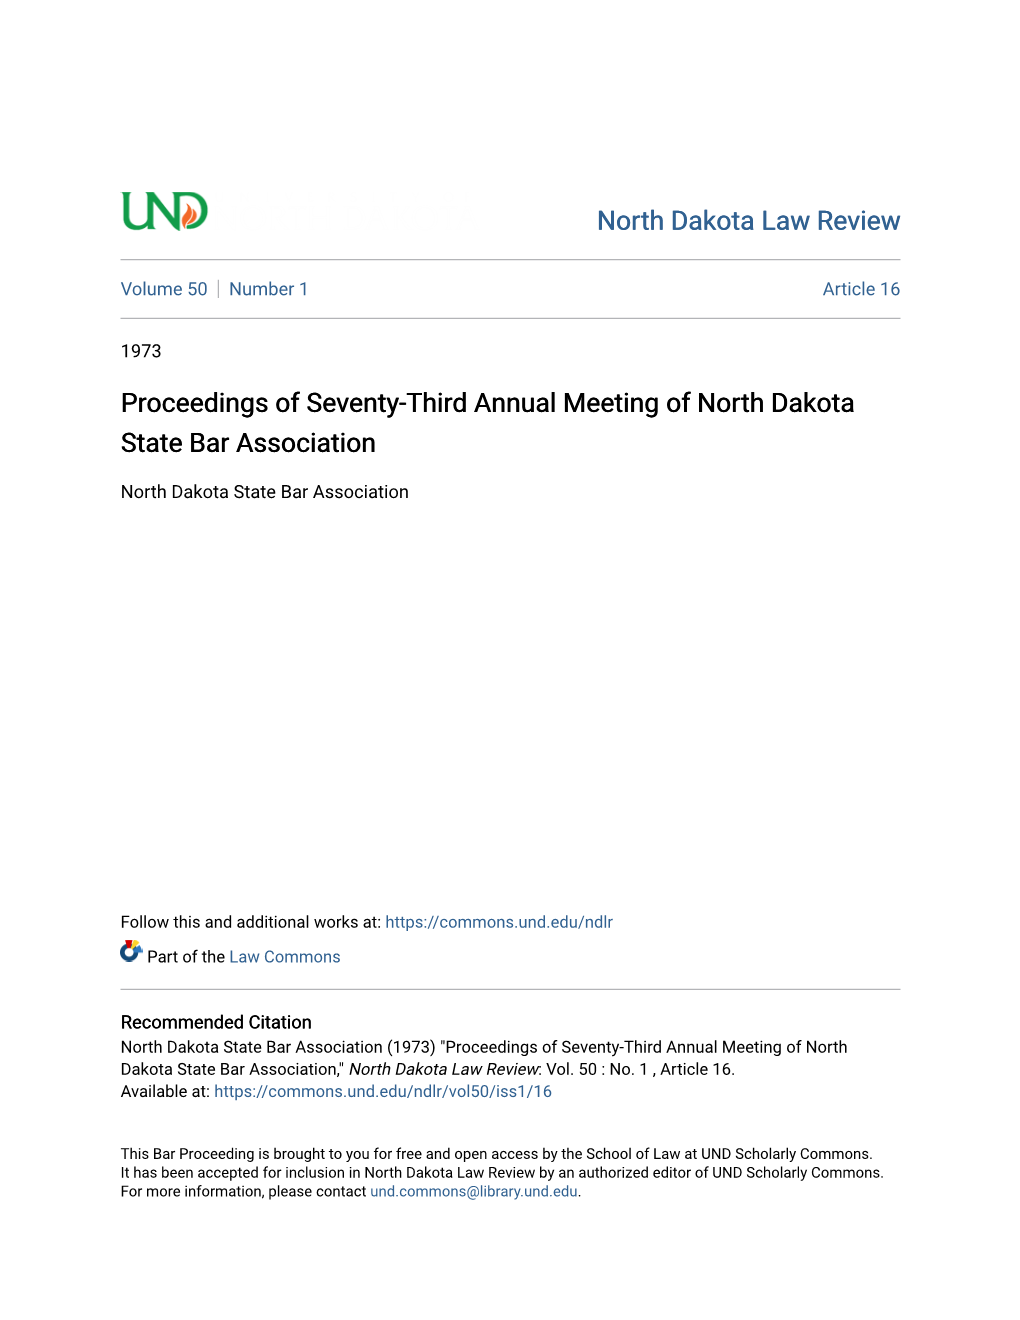 Proceedings of Seventy-Third Annual Meeting of North Dakota State Bar Association